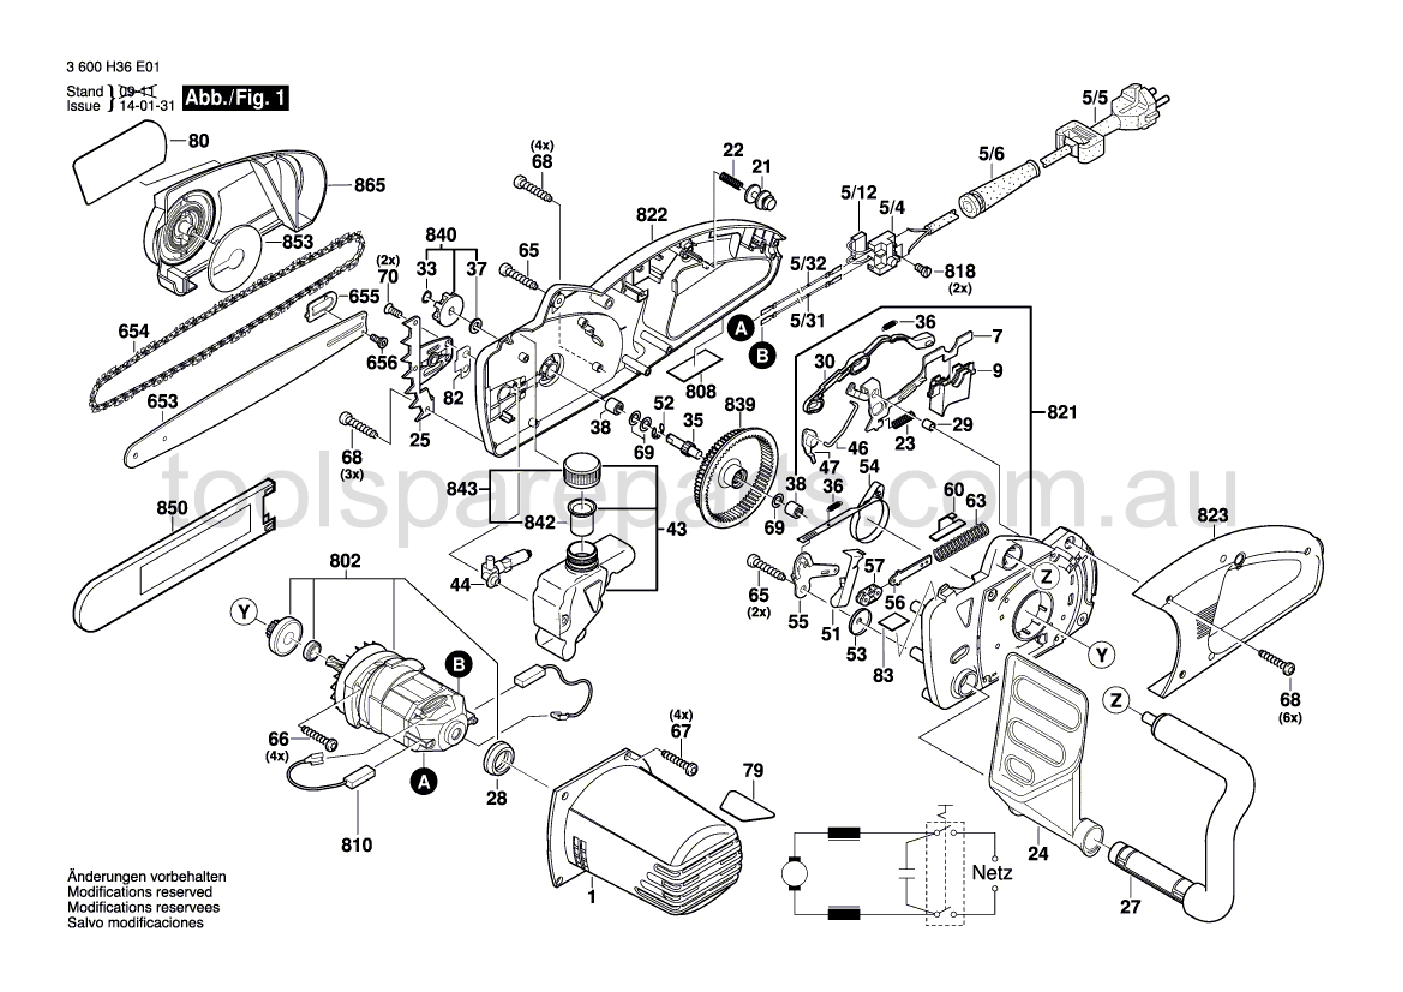 Bosch AKE 40-19 S 3600H36F41  Diagram 1